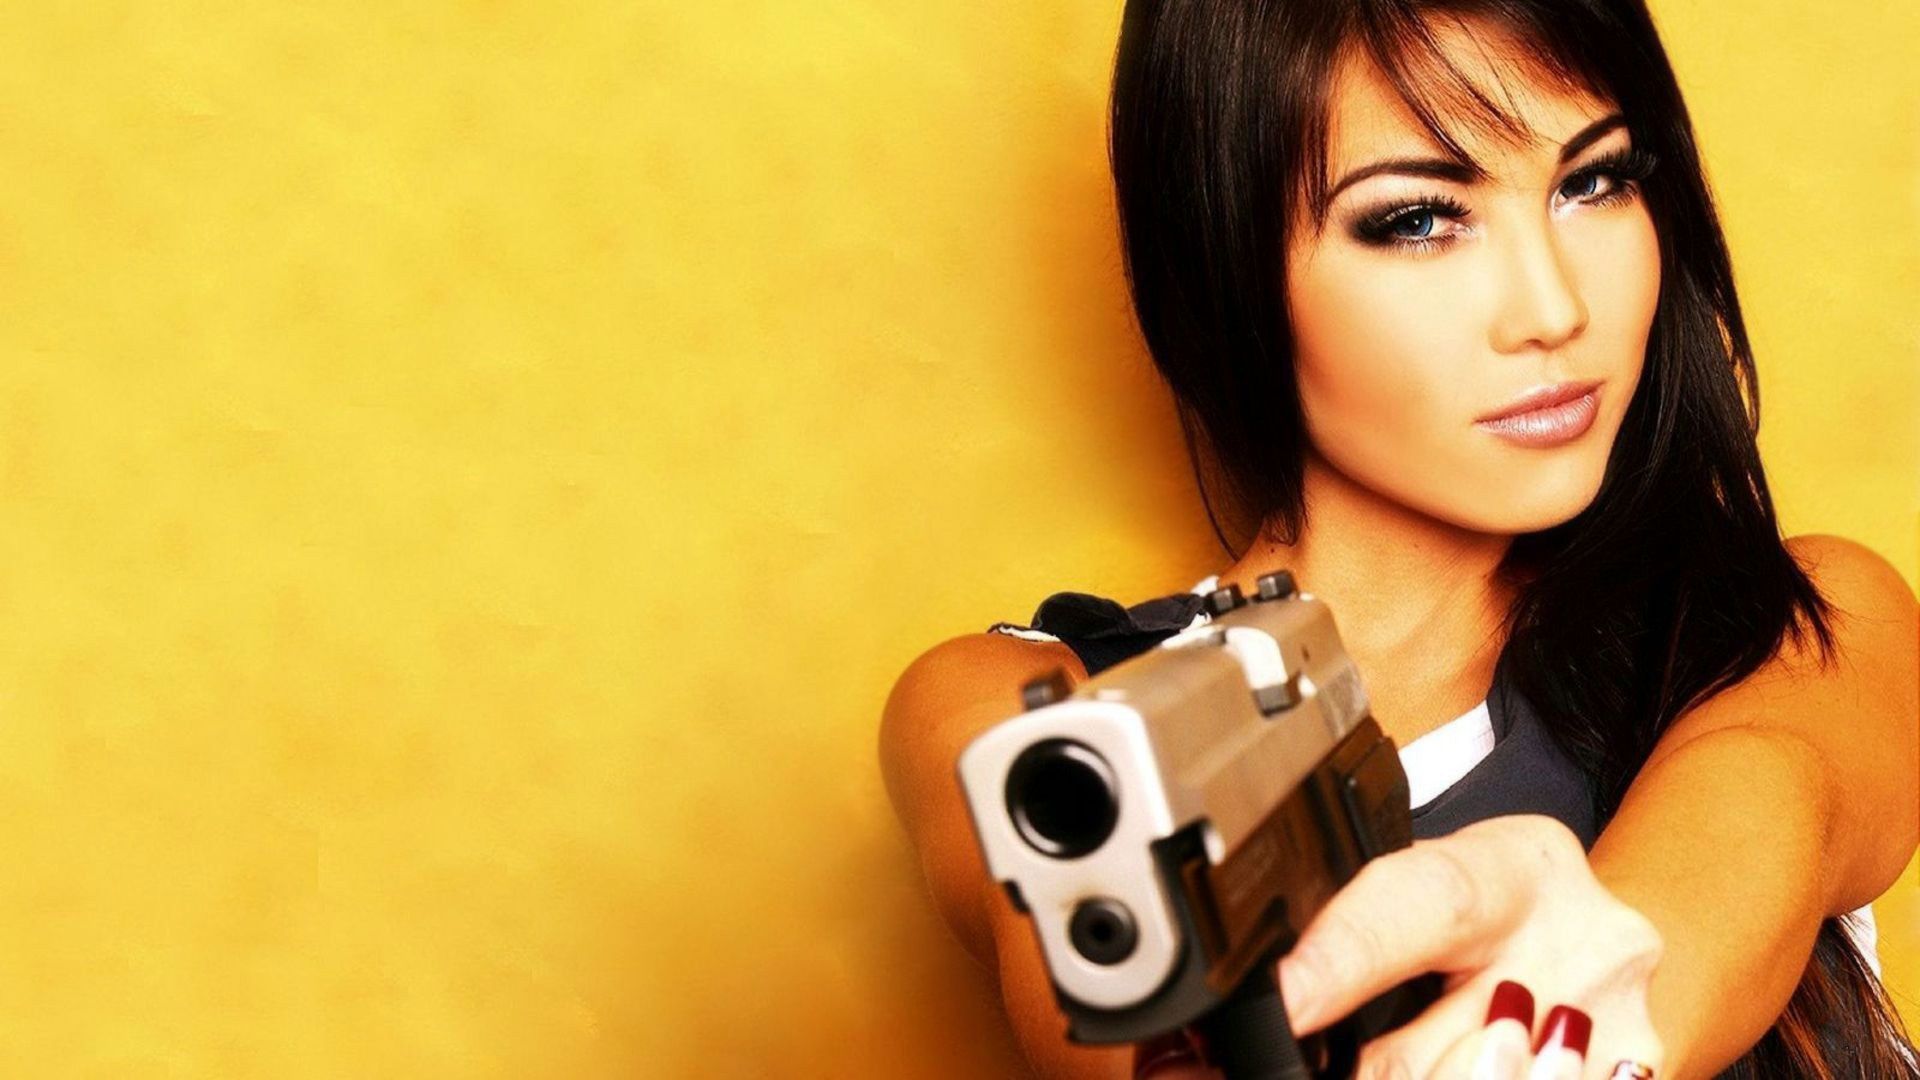 Girl With Gun Desktop Wallpaper, Girl With Gun Pictures, New